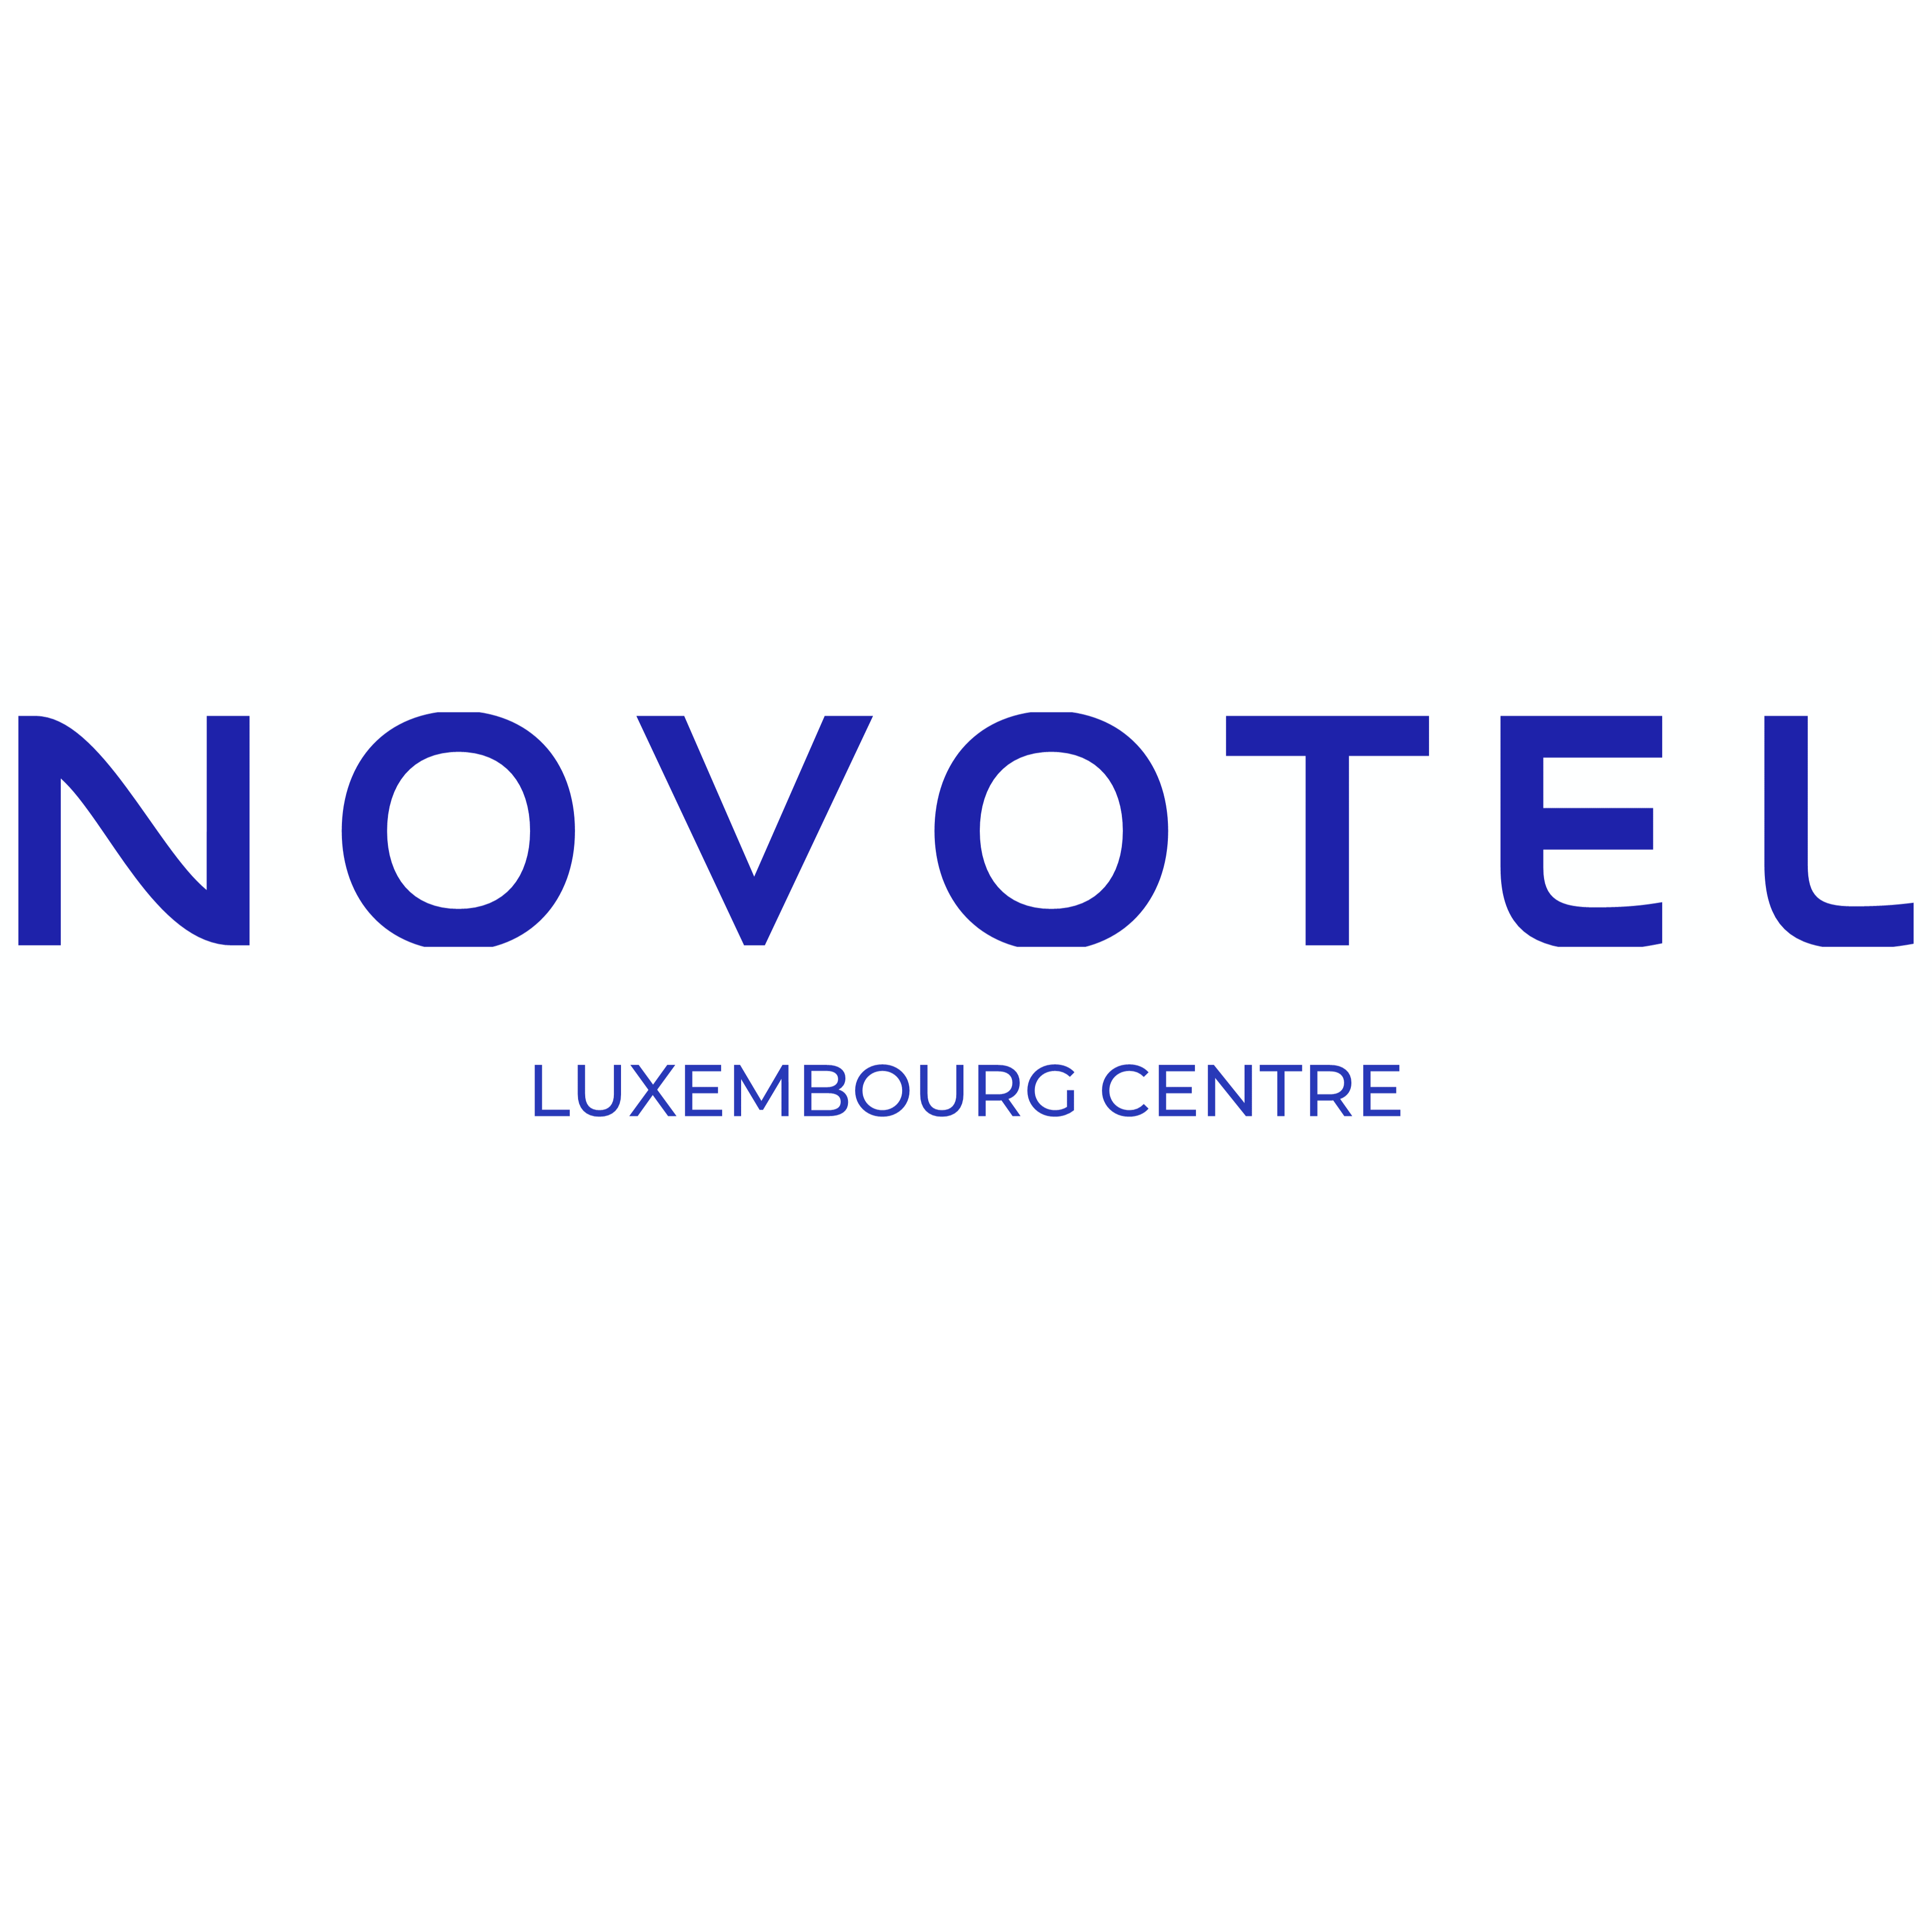 Novotel Luxembourg Centre Logo